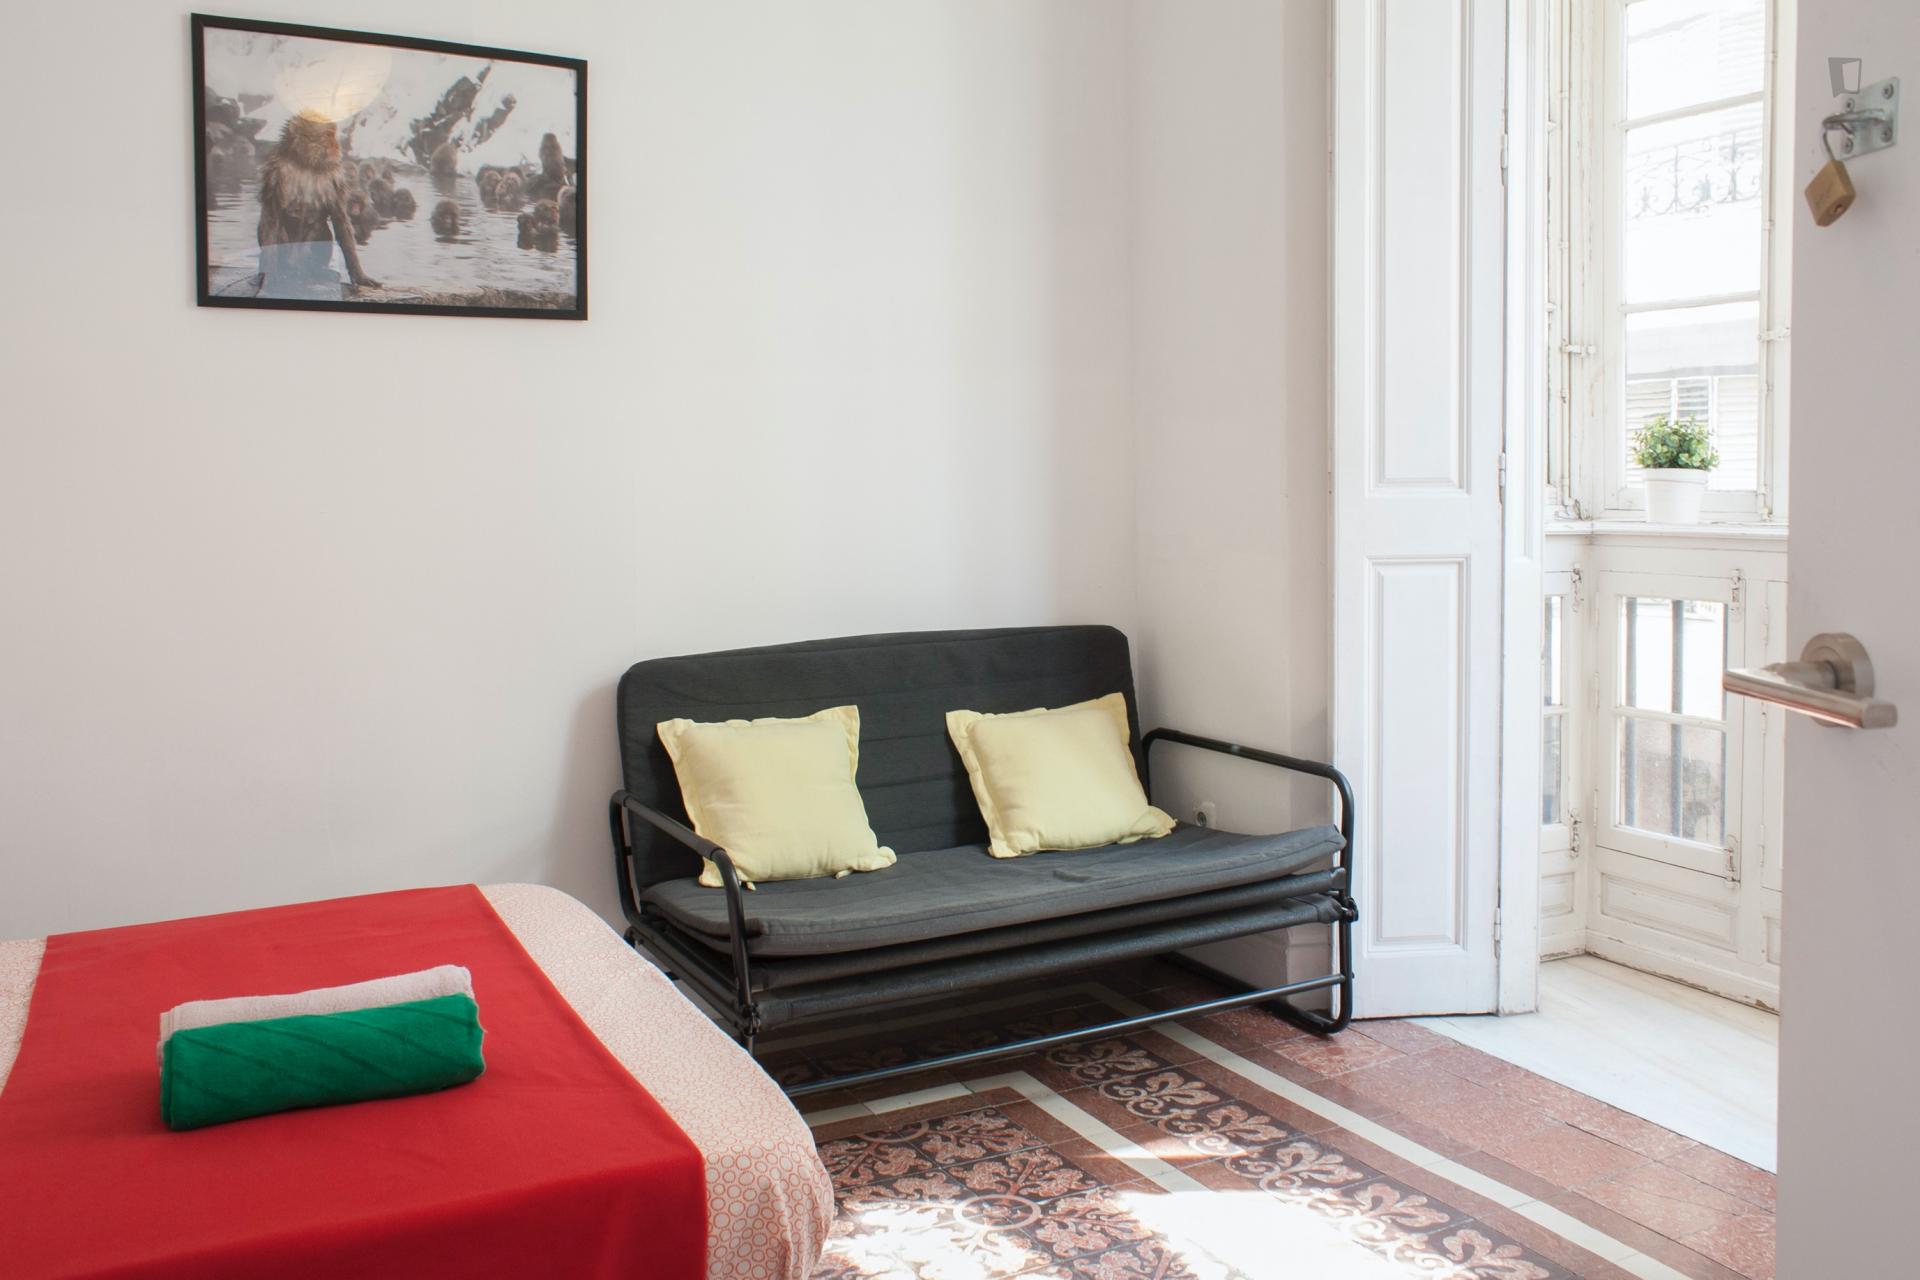 Comedias- Spacious Room for Expat in Malaga